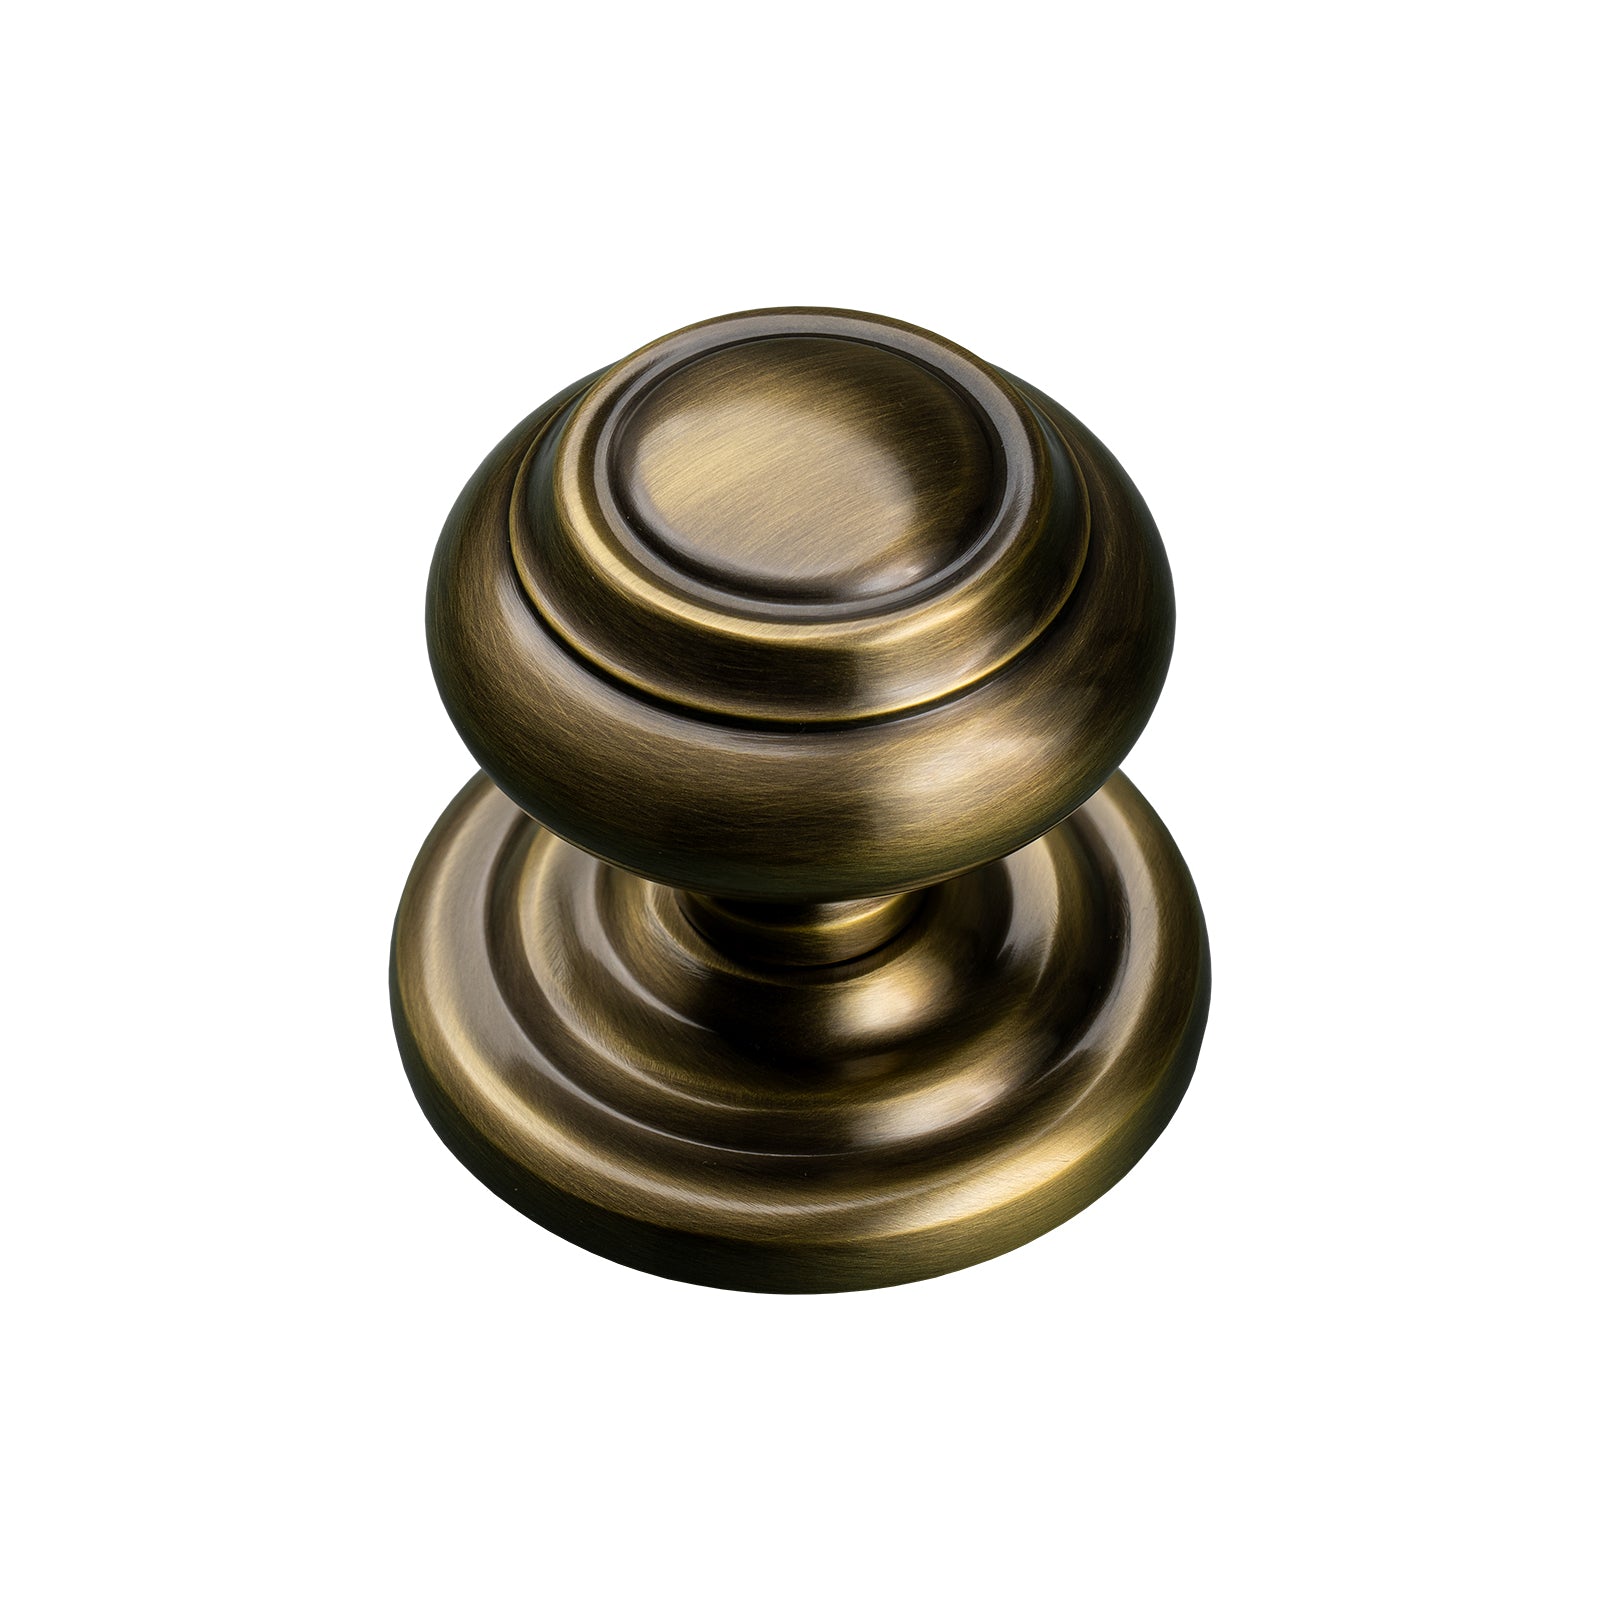 aged brass ringed door knob SHOW